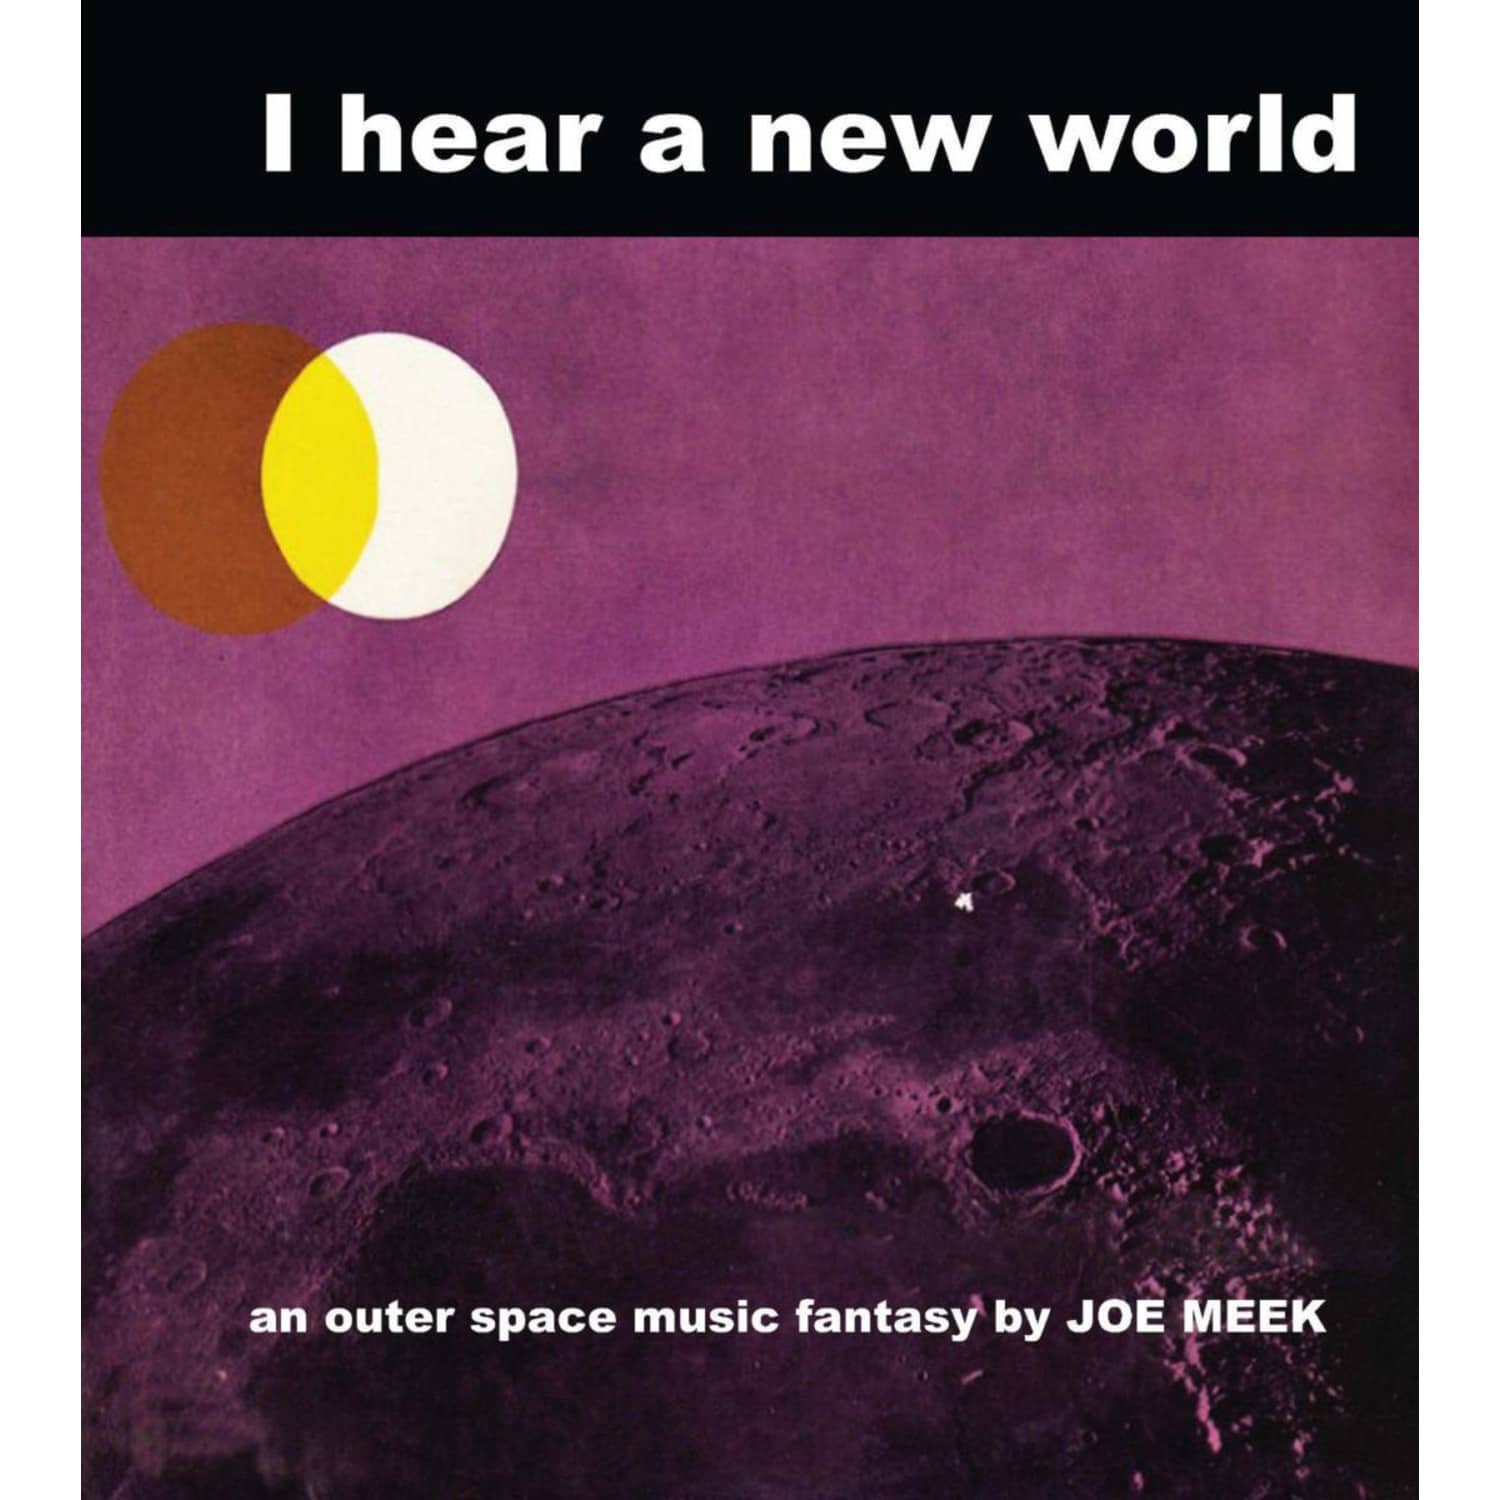 Joe Meek - I HEAR A NEW WORLD 